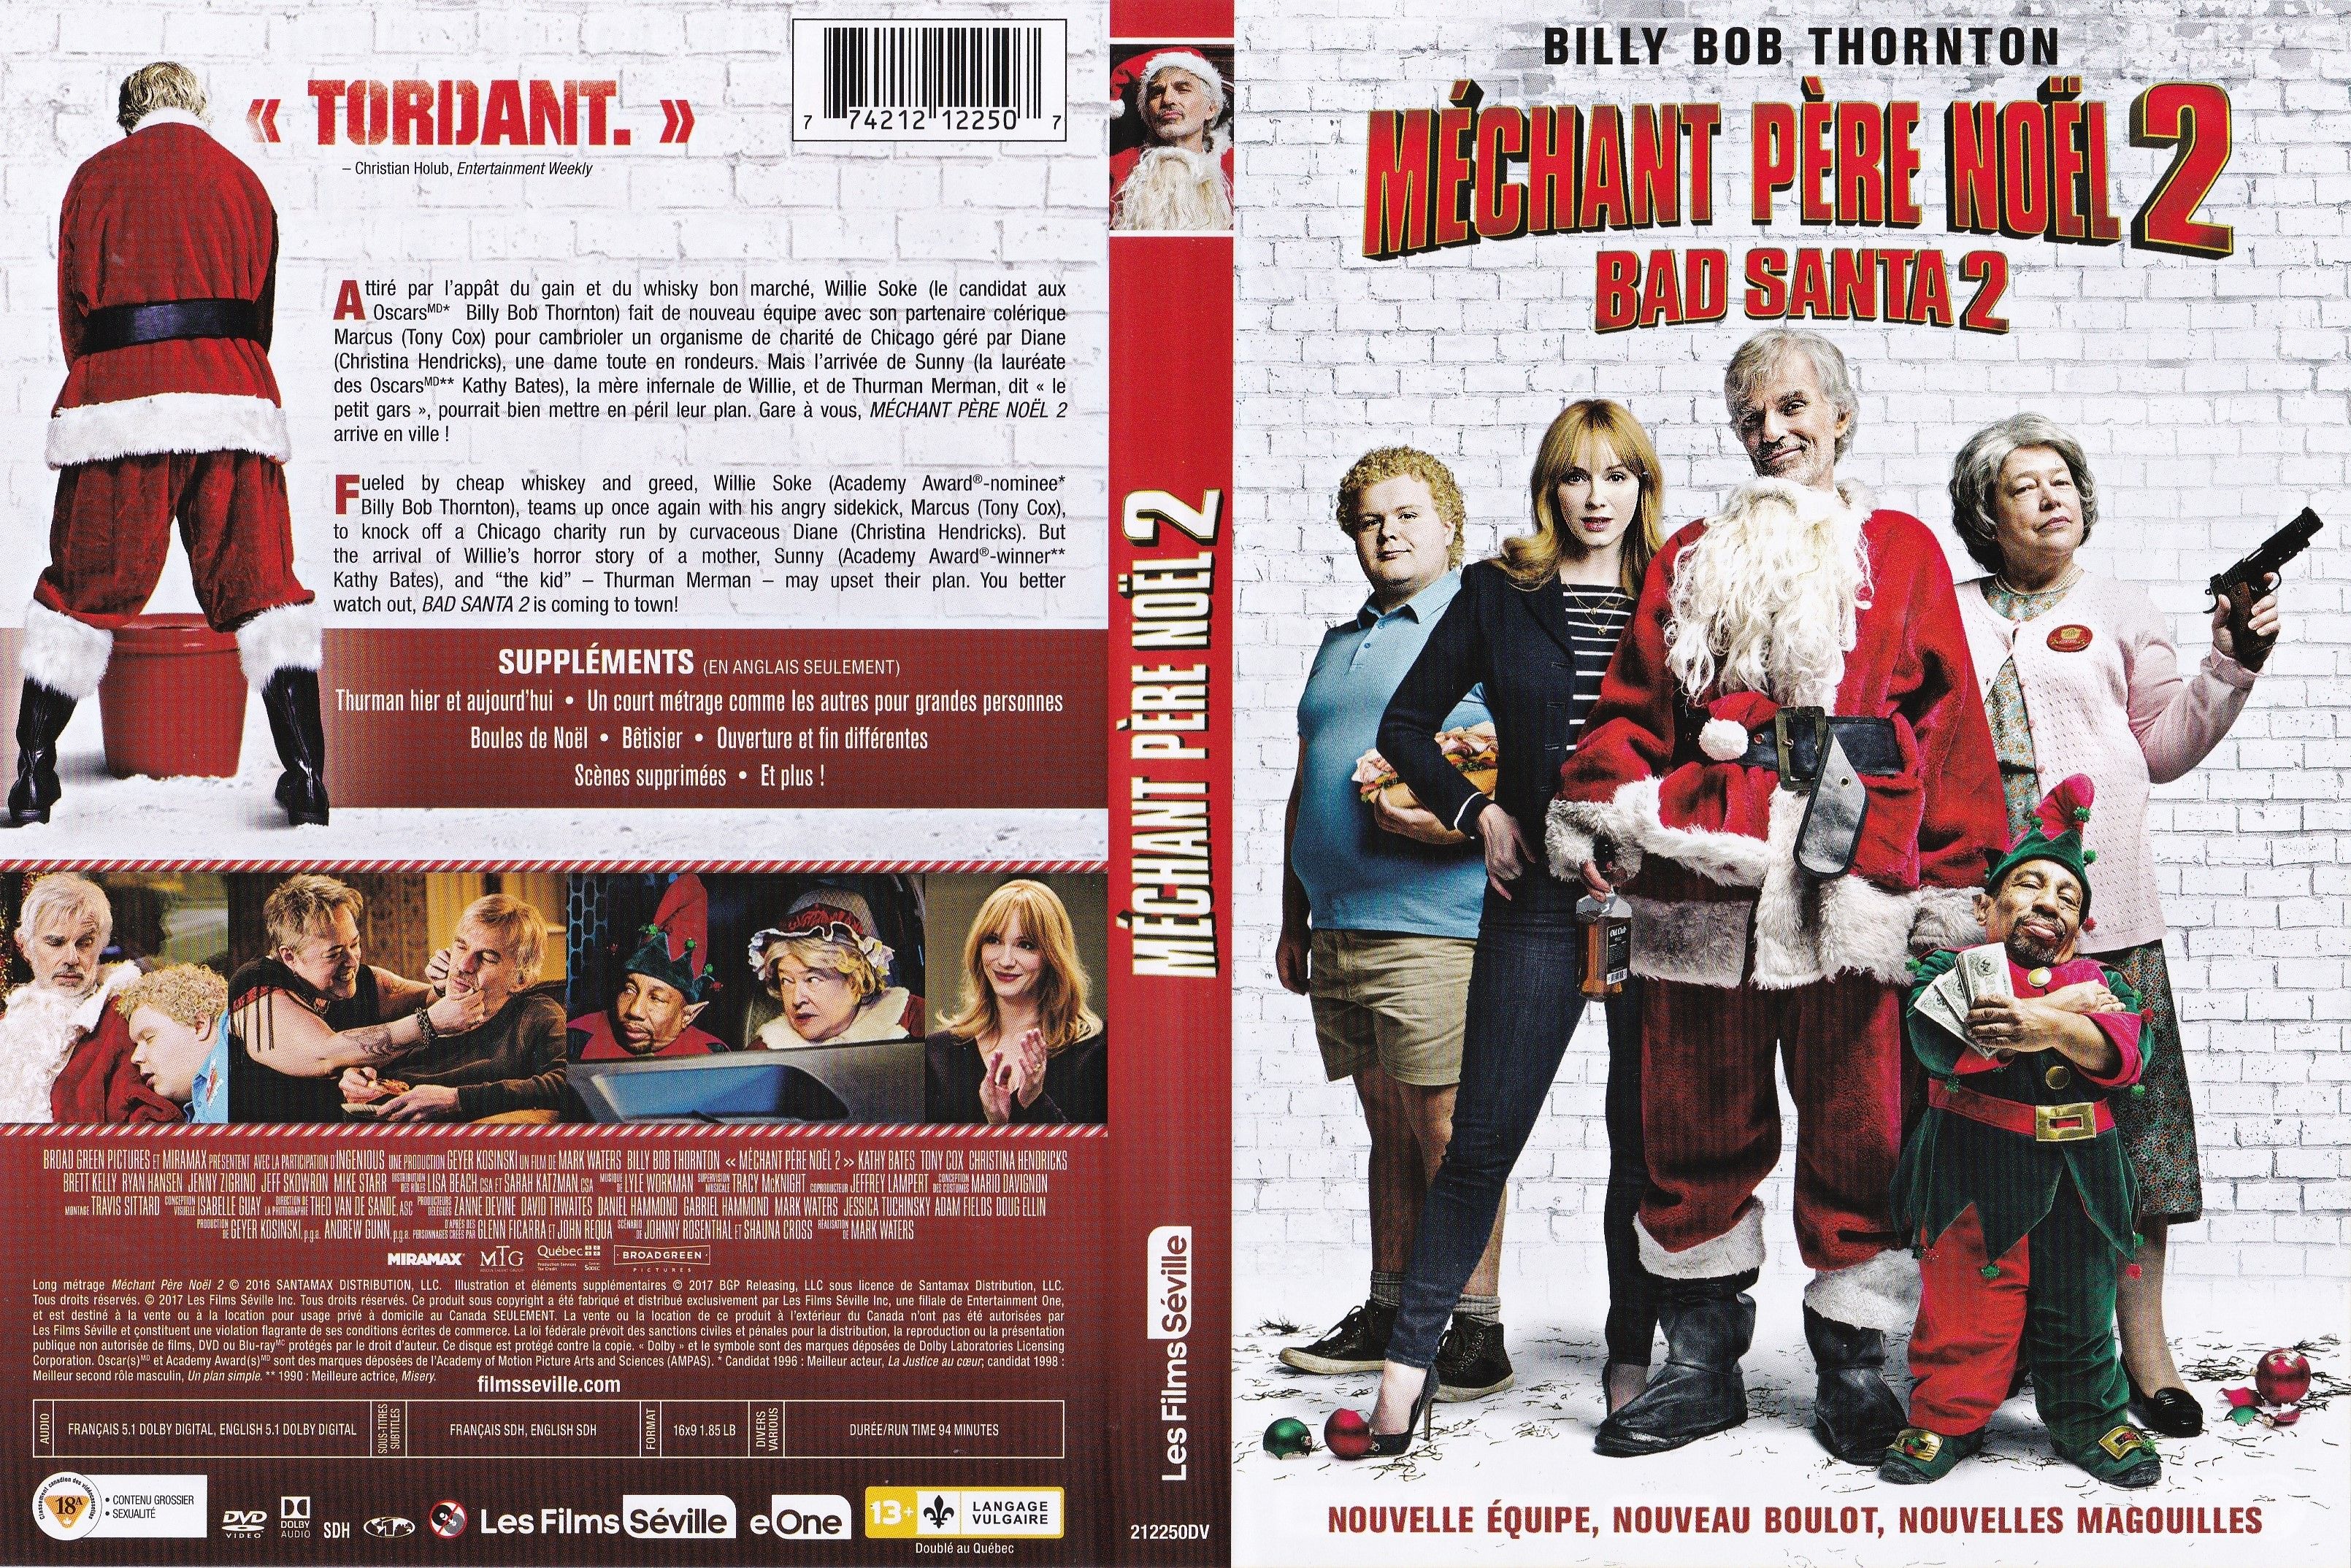 Jaquette DVD Mechant pere noel 2 - Bad santa 2 (canadienne)